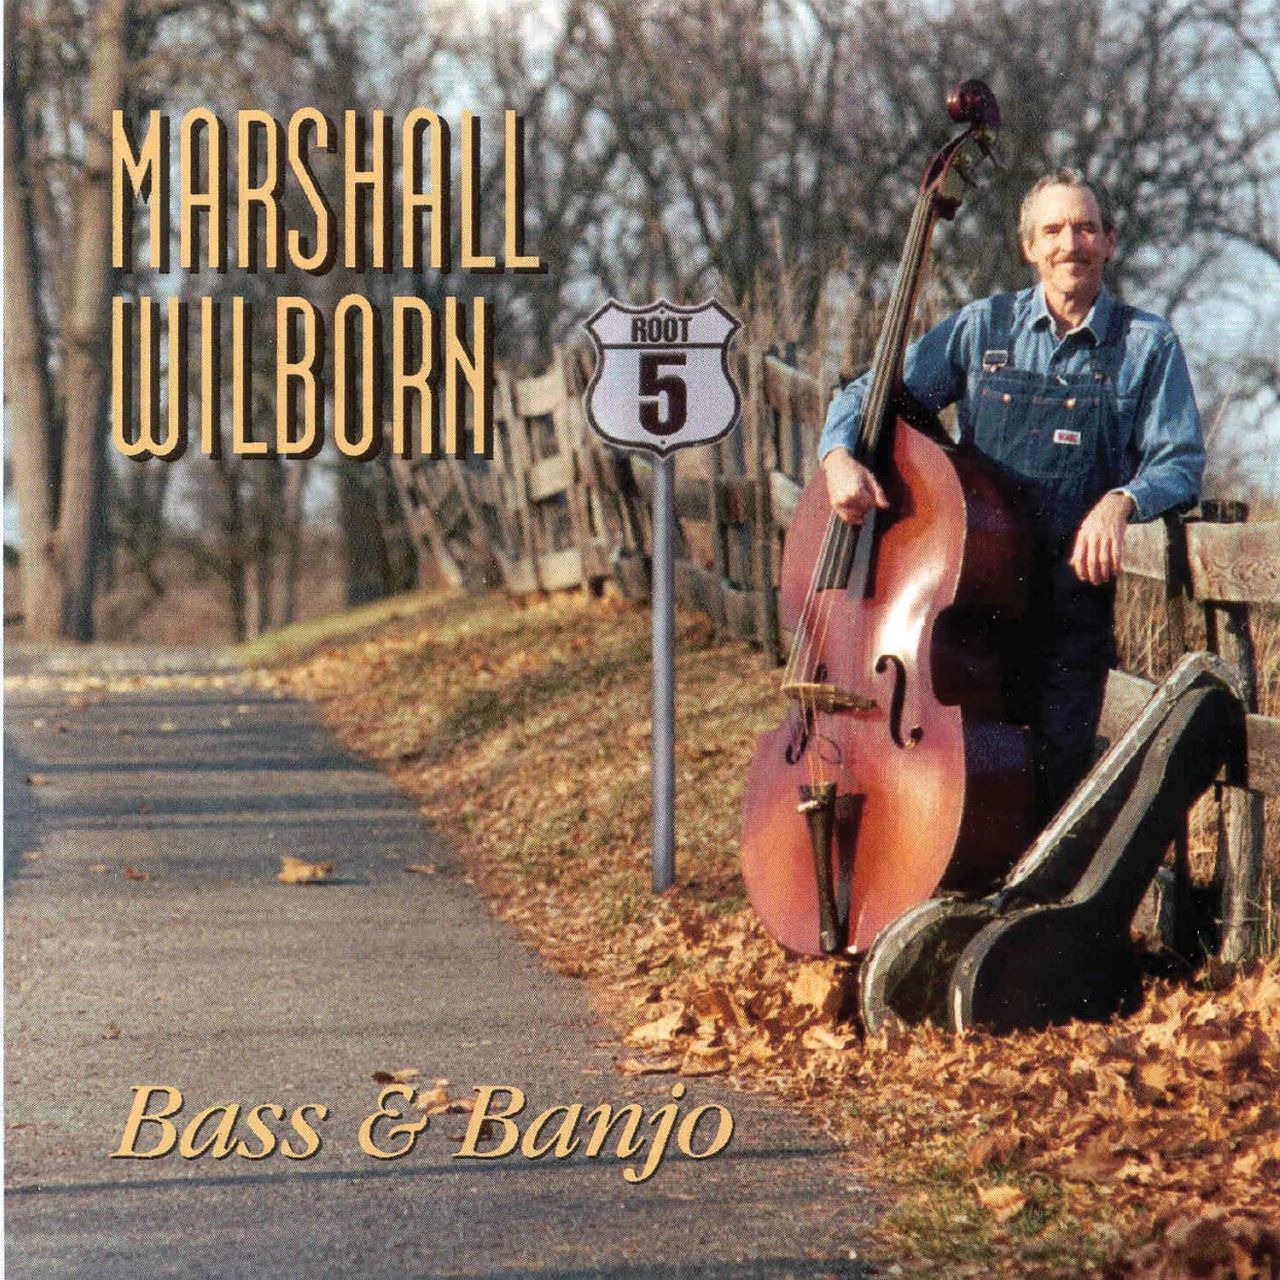 Marshall Wilborn - Root 5 - Bass & Banjo cover album